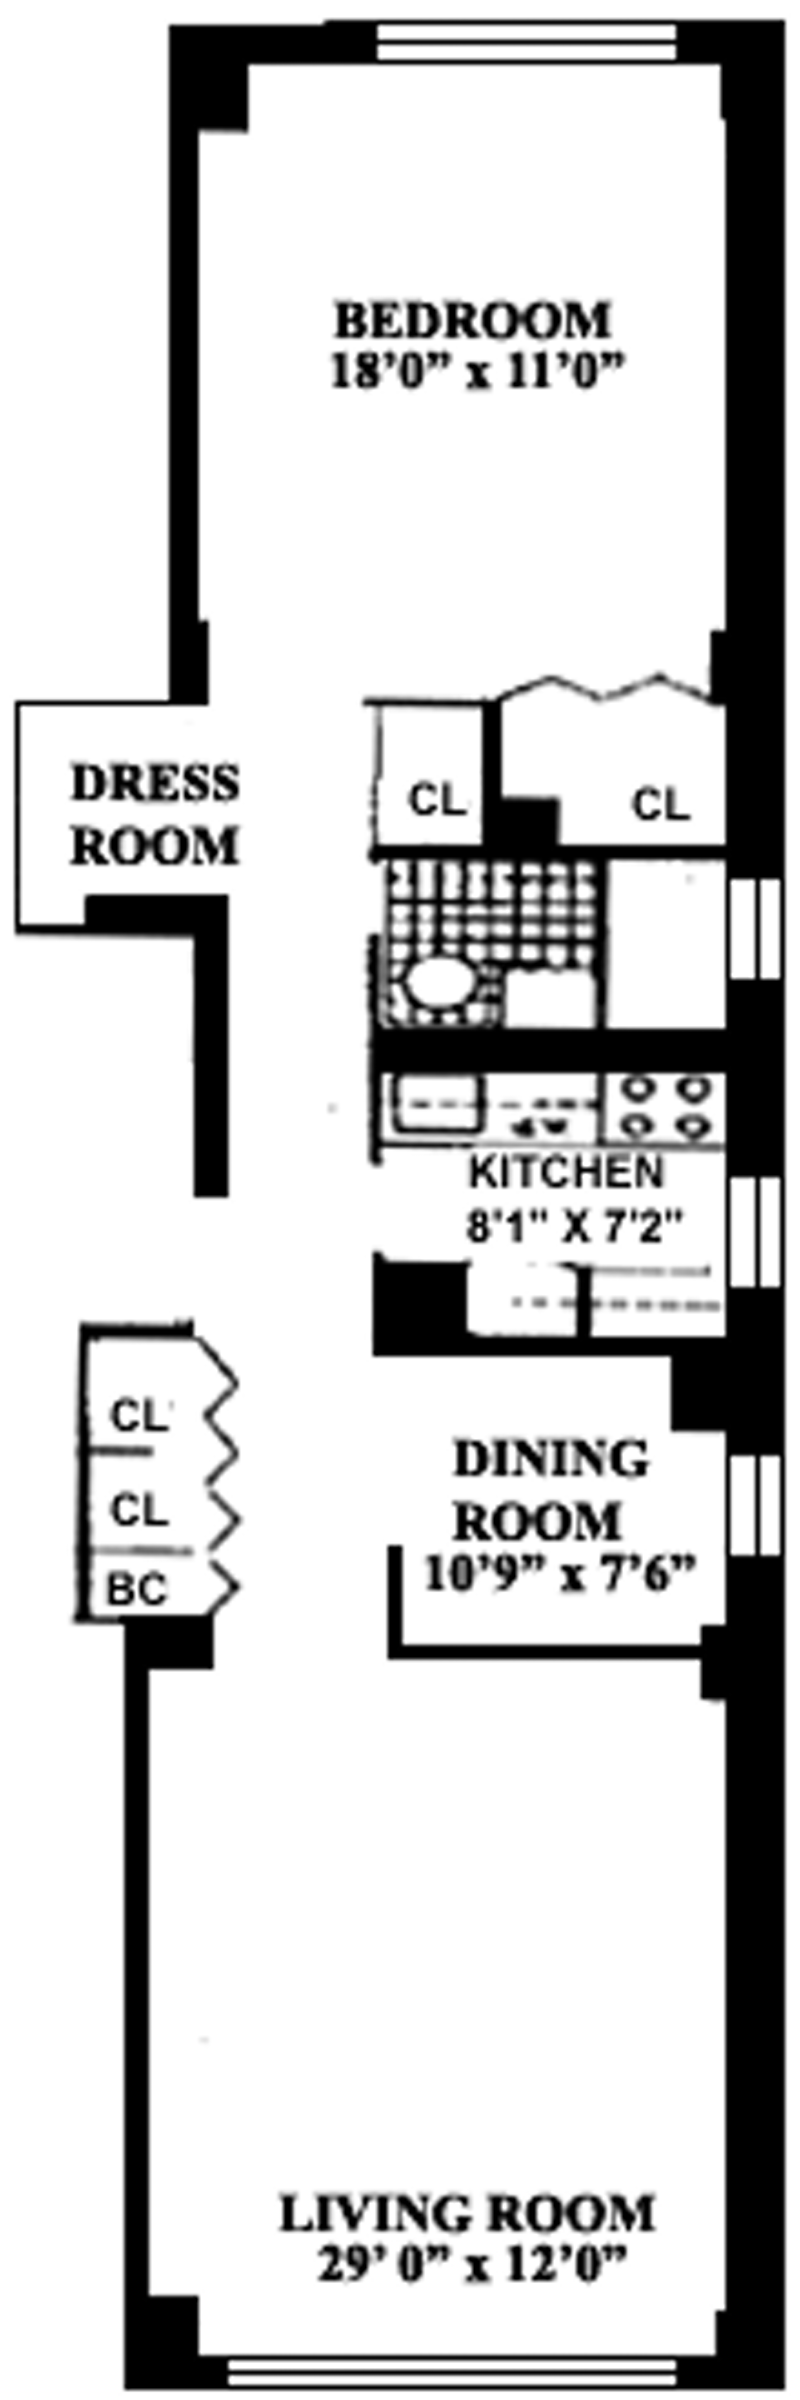 Floorplan for 520 East 72nd Street, 5A